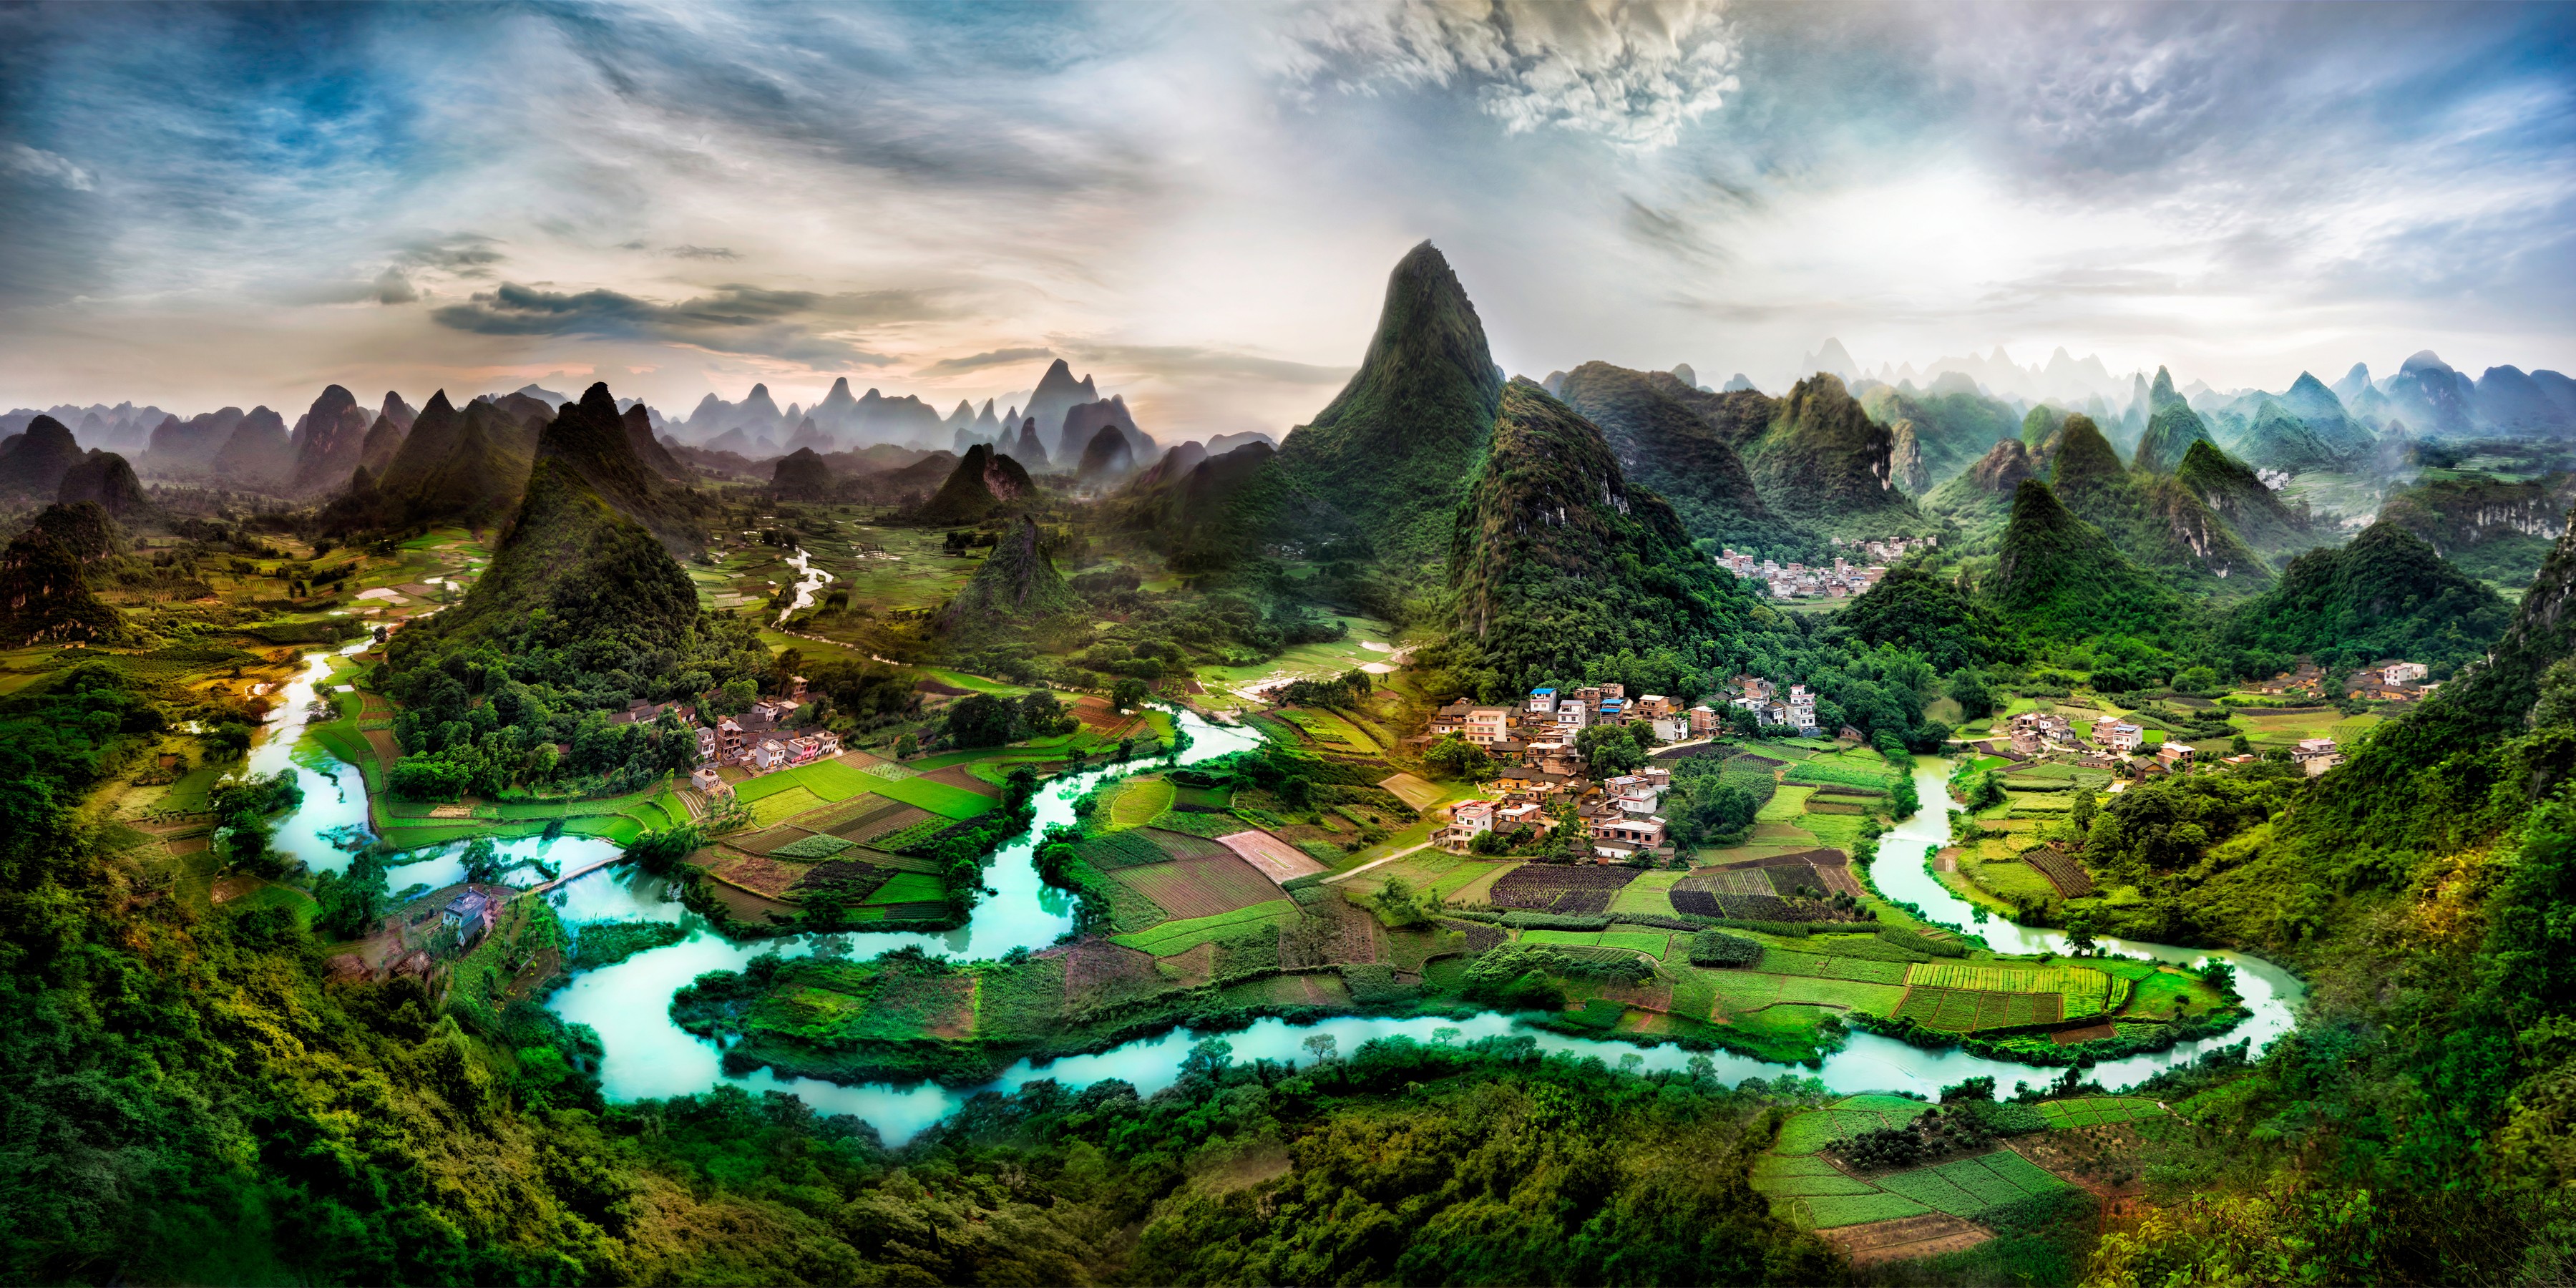 General 3600x1800 digital art landscape China Asia nature panorama rocks field river